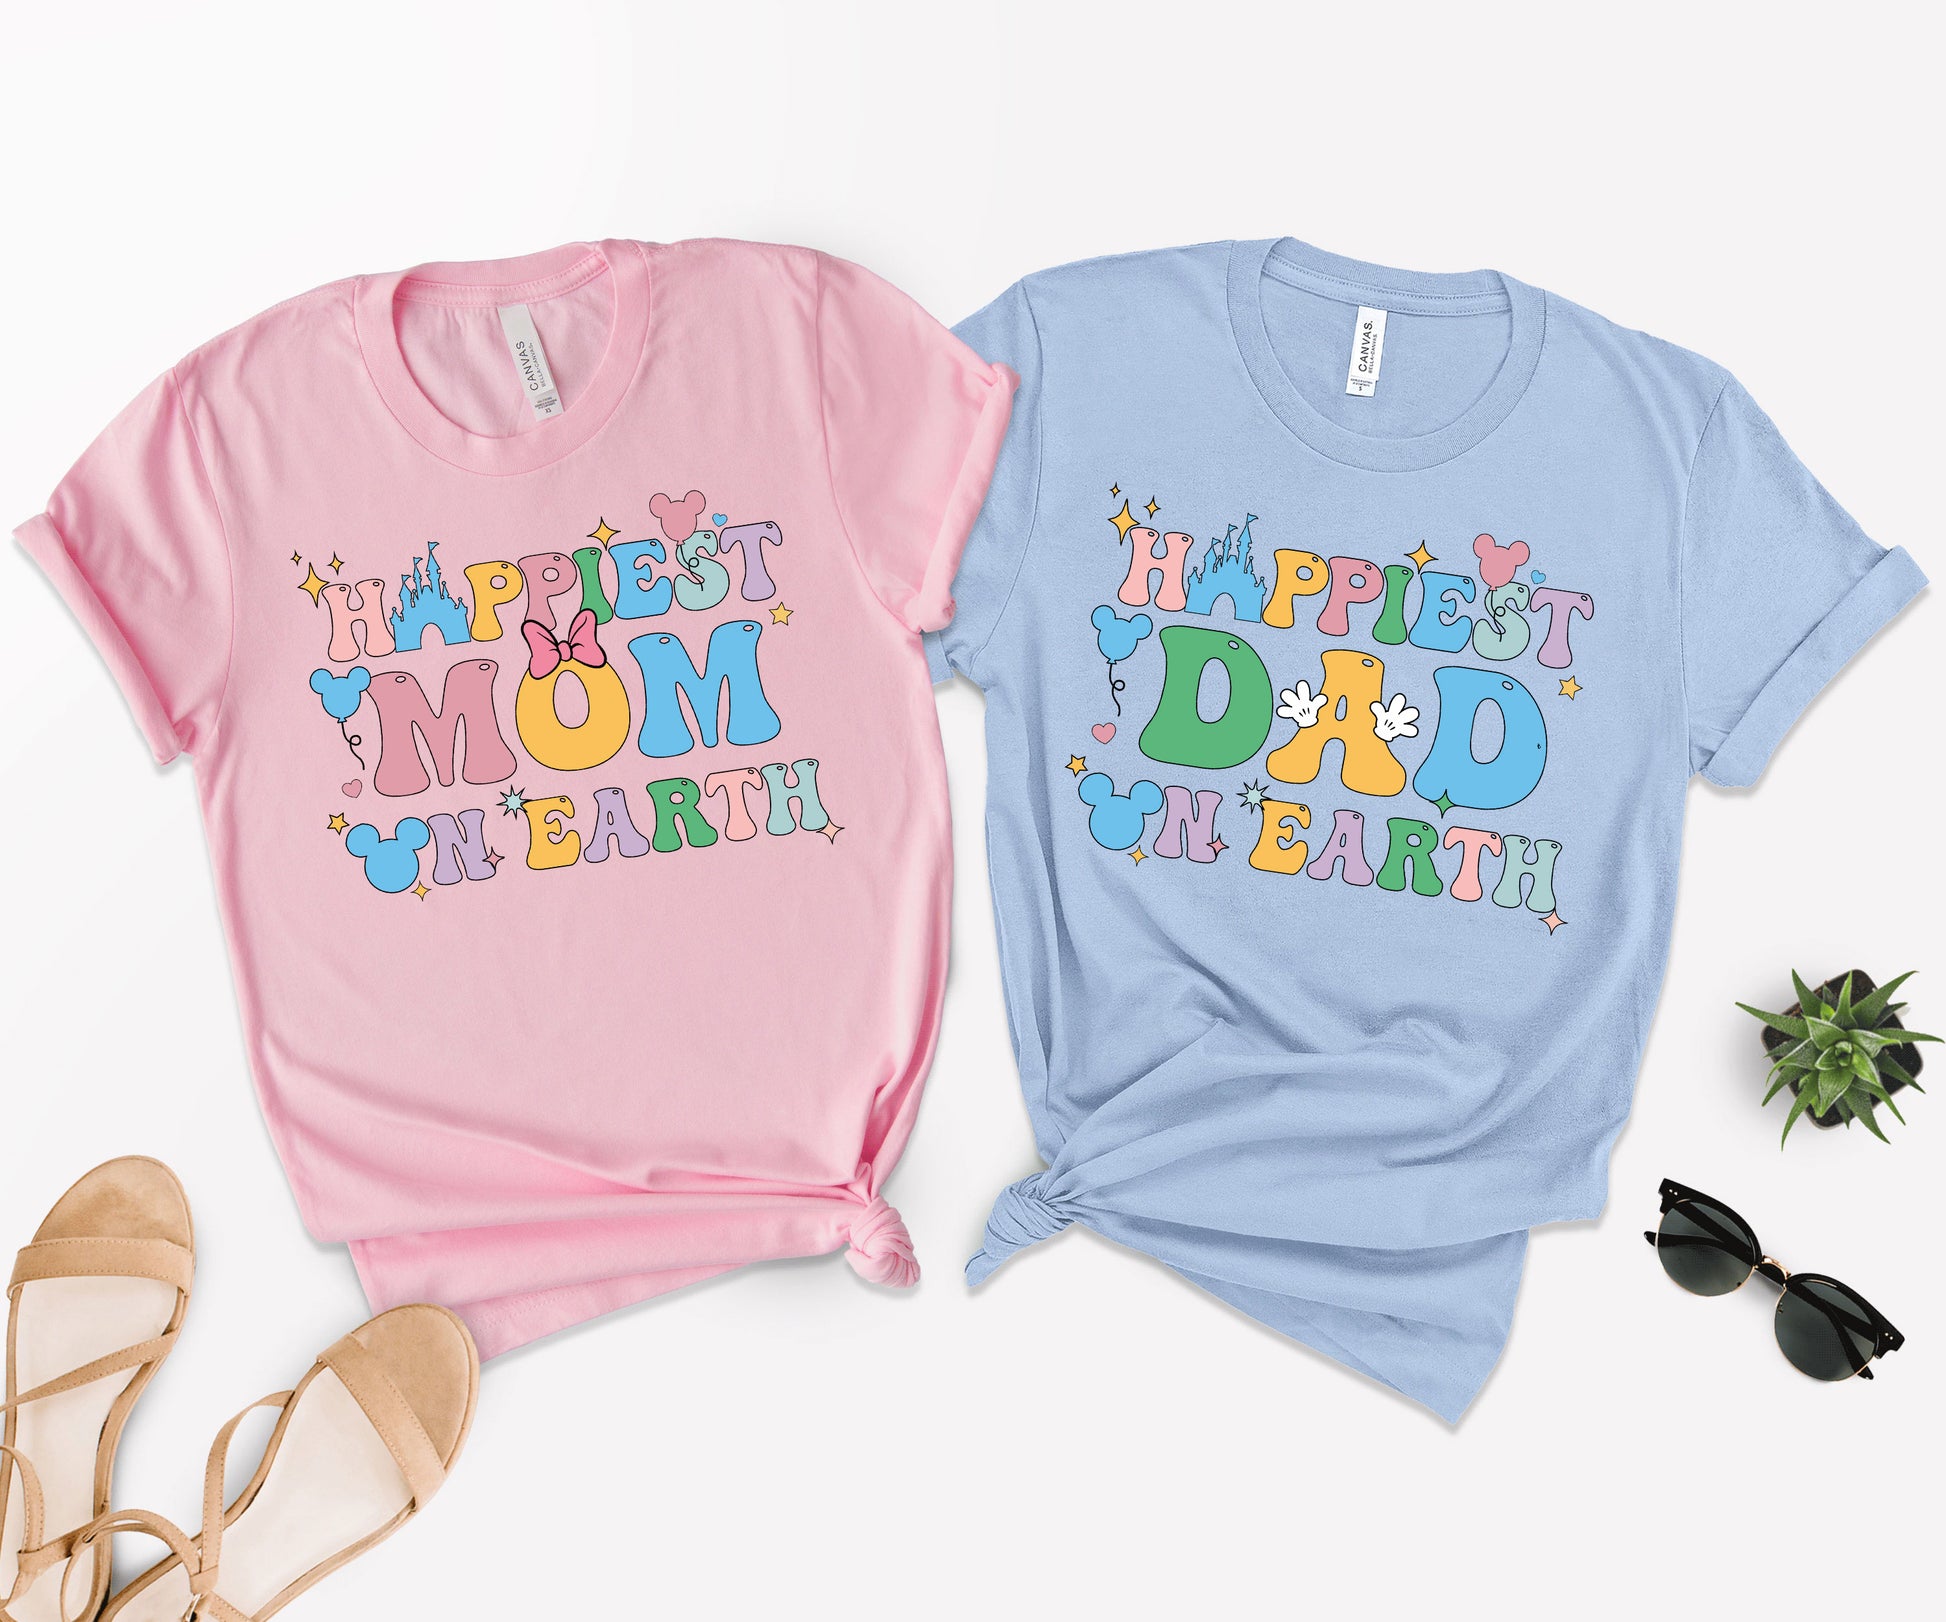 Happiest Mom on Earth Shirt, Happiest Dad Shirt, Disney Family Tees-newamarketing